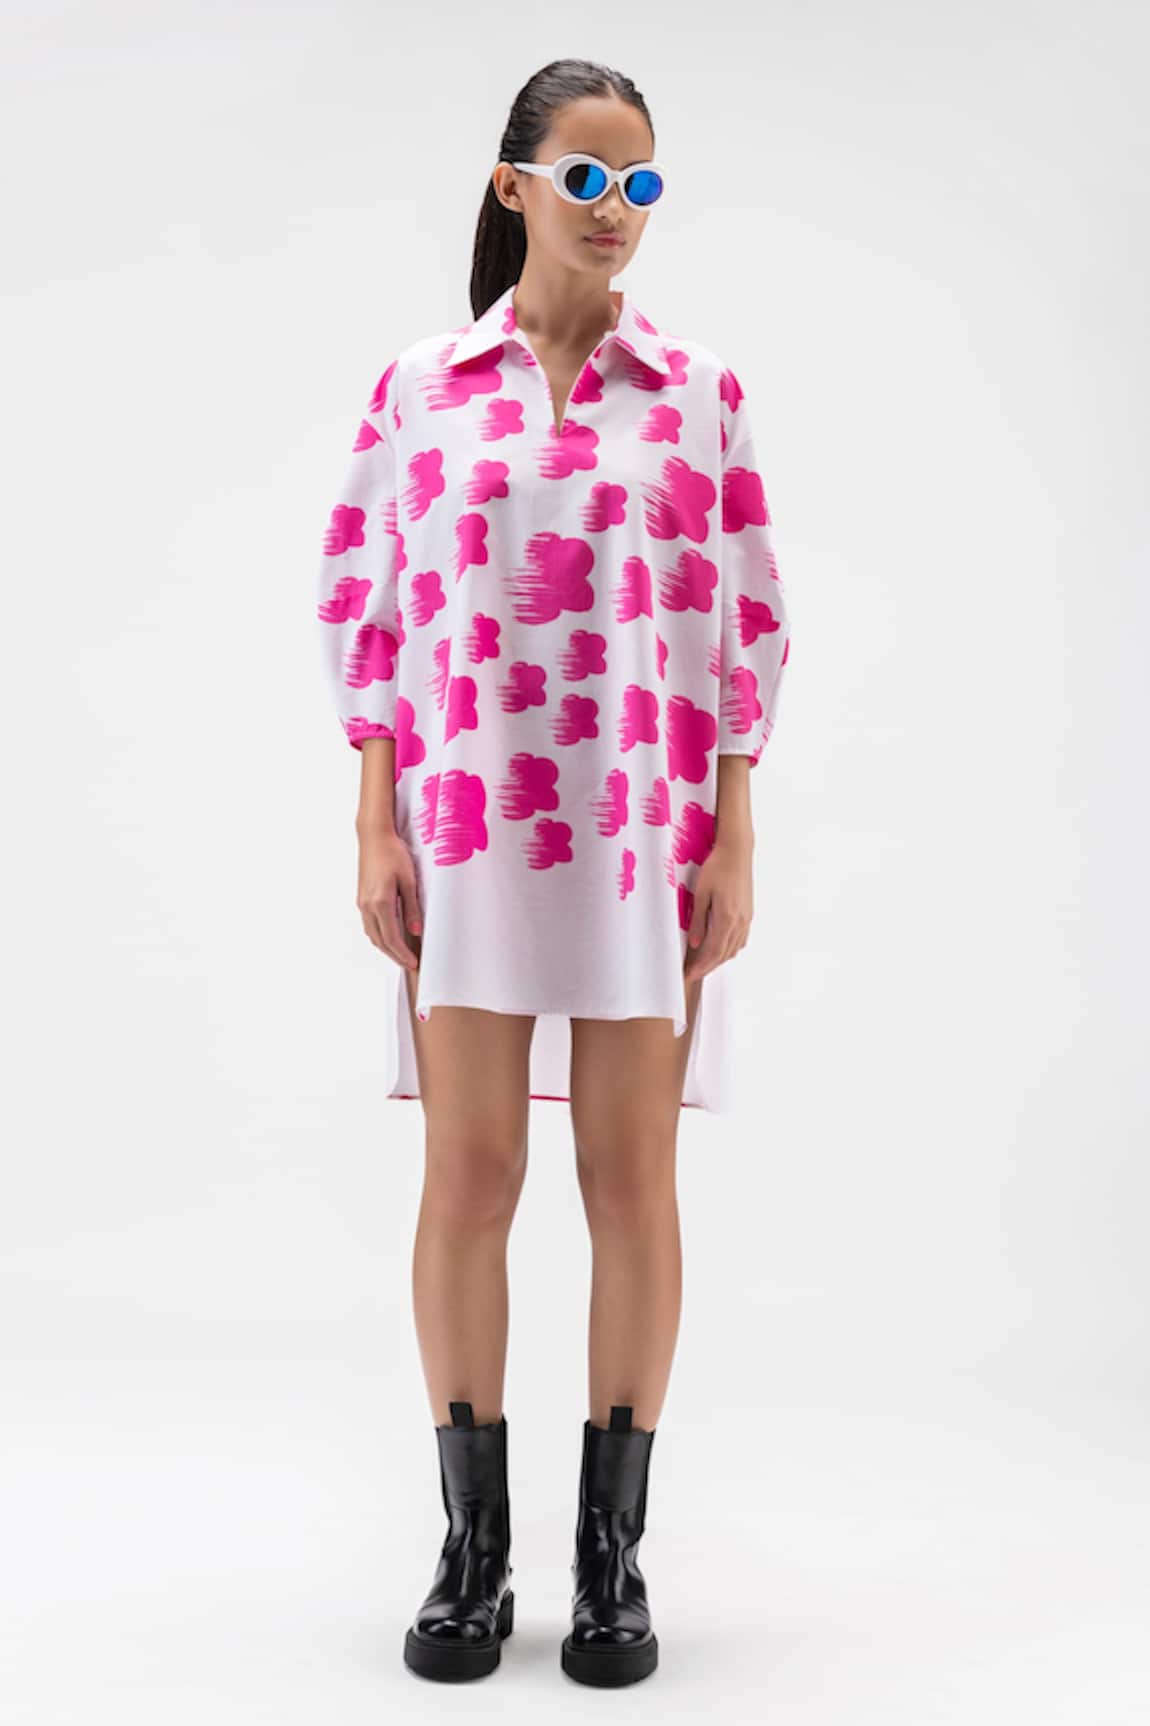 Genes Lecoanet Hemant Floral Print Tunic Shirt